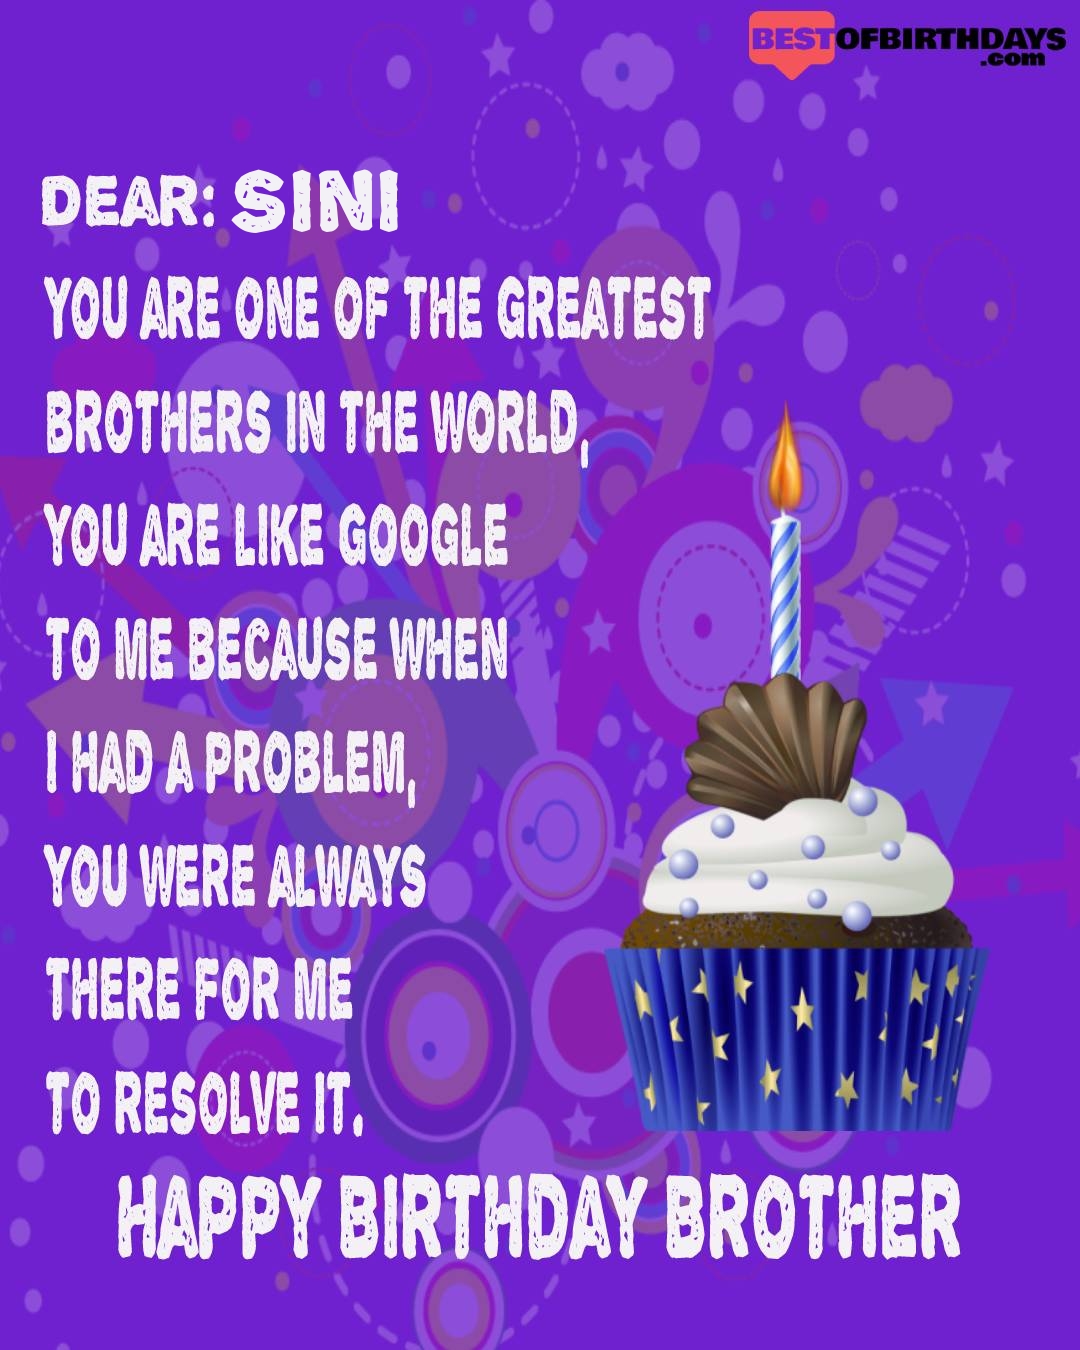 Happy birthday sini bhai brother bro